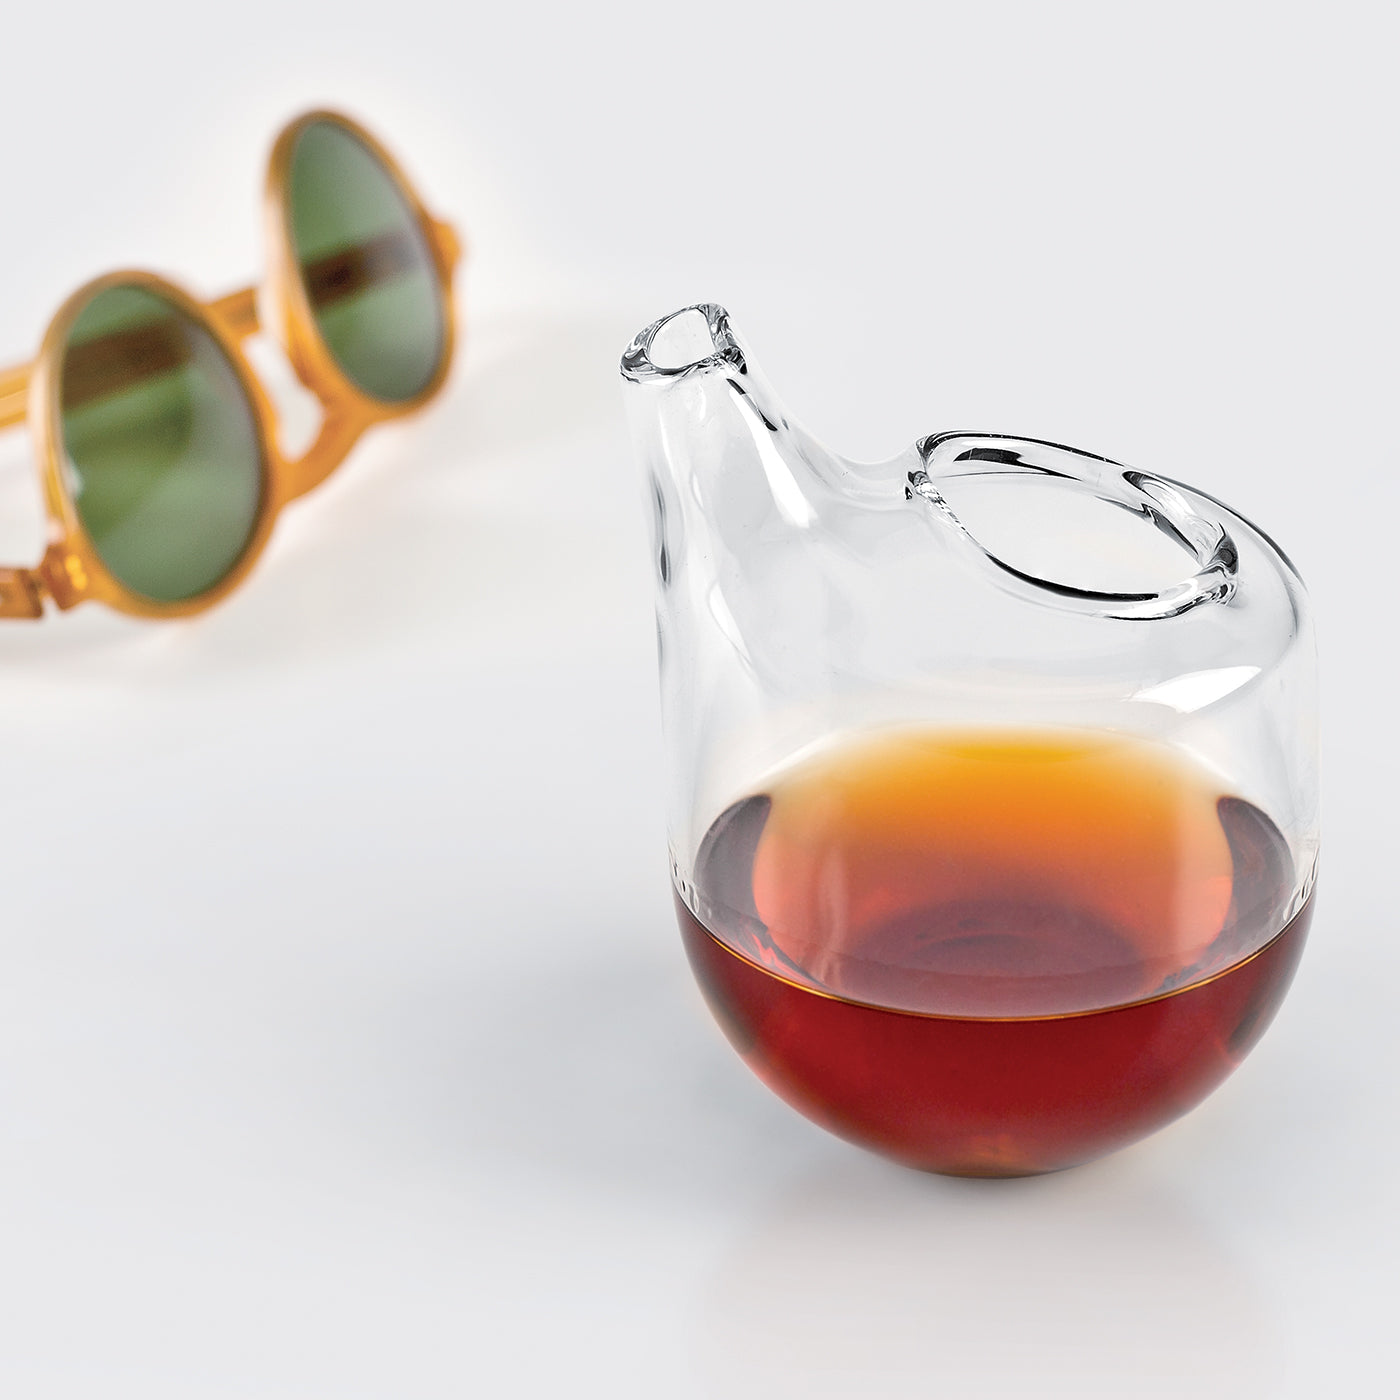 Bebé Set of 2 Whiskey Glasses by Daniele Buschi - Alternative view 1